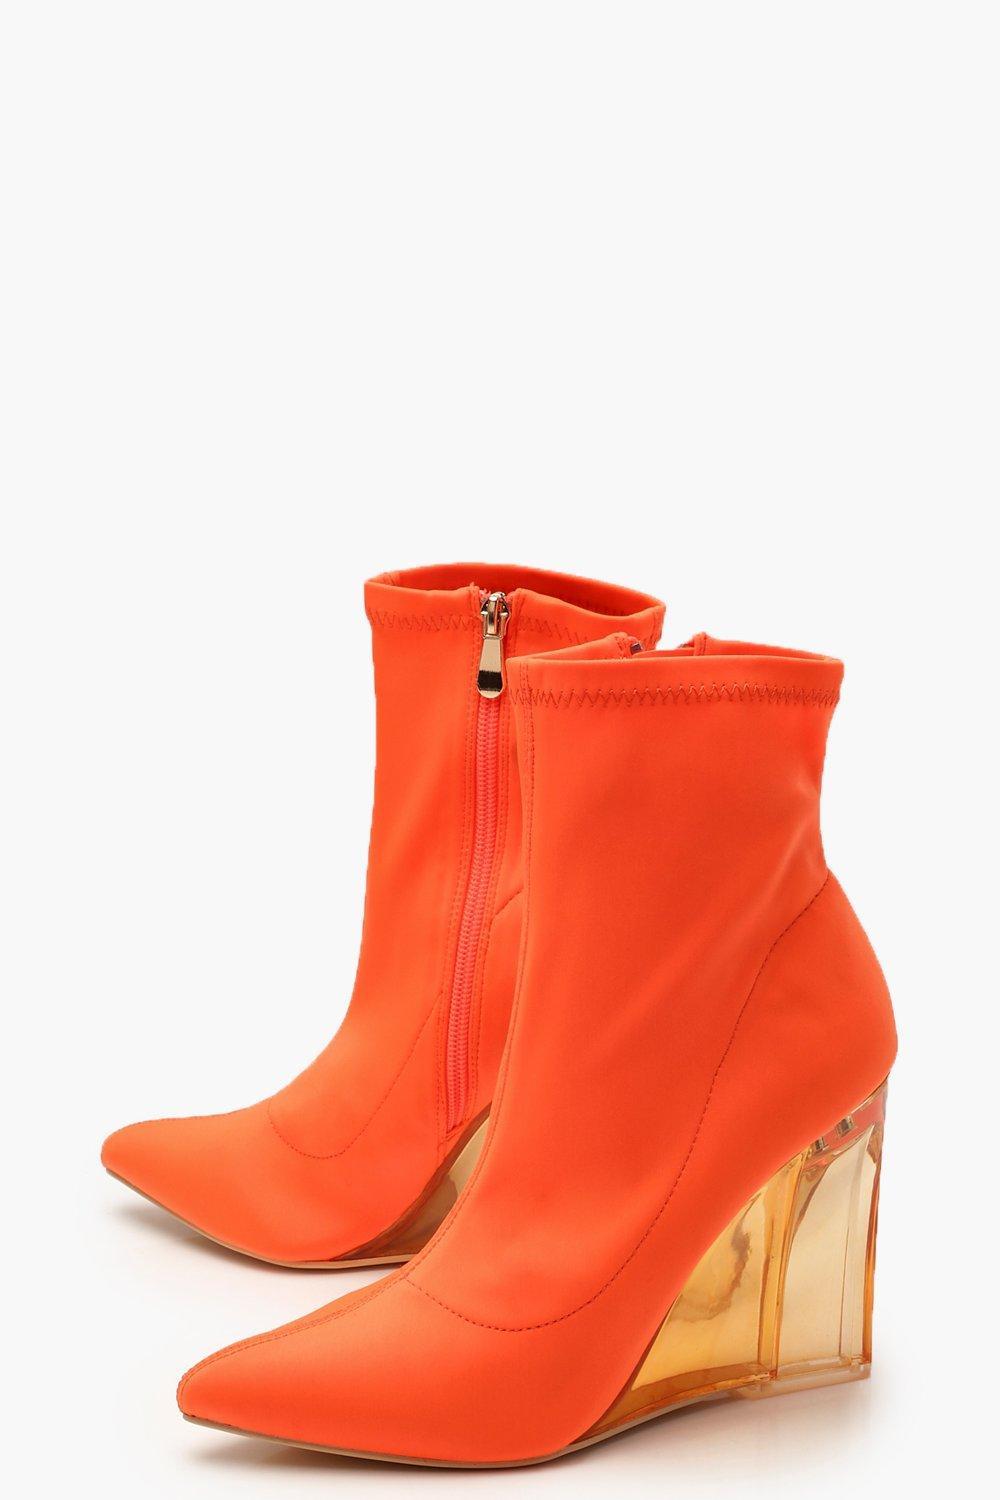 Boohoo Neon Clear Wedge Sock Boots in Orange | Lyst